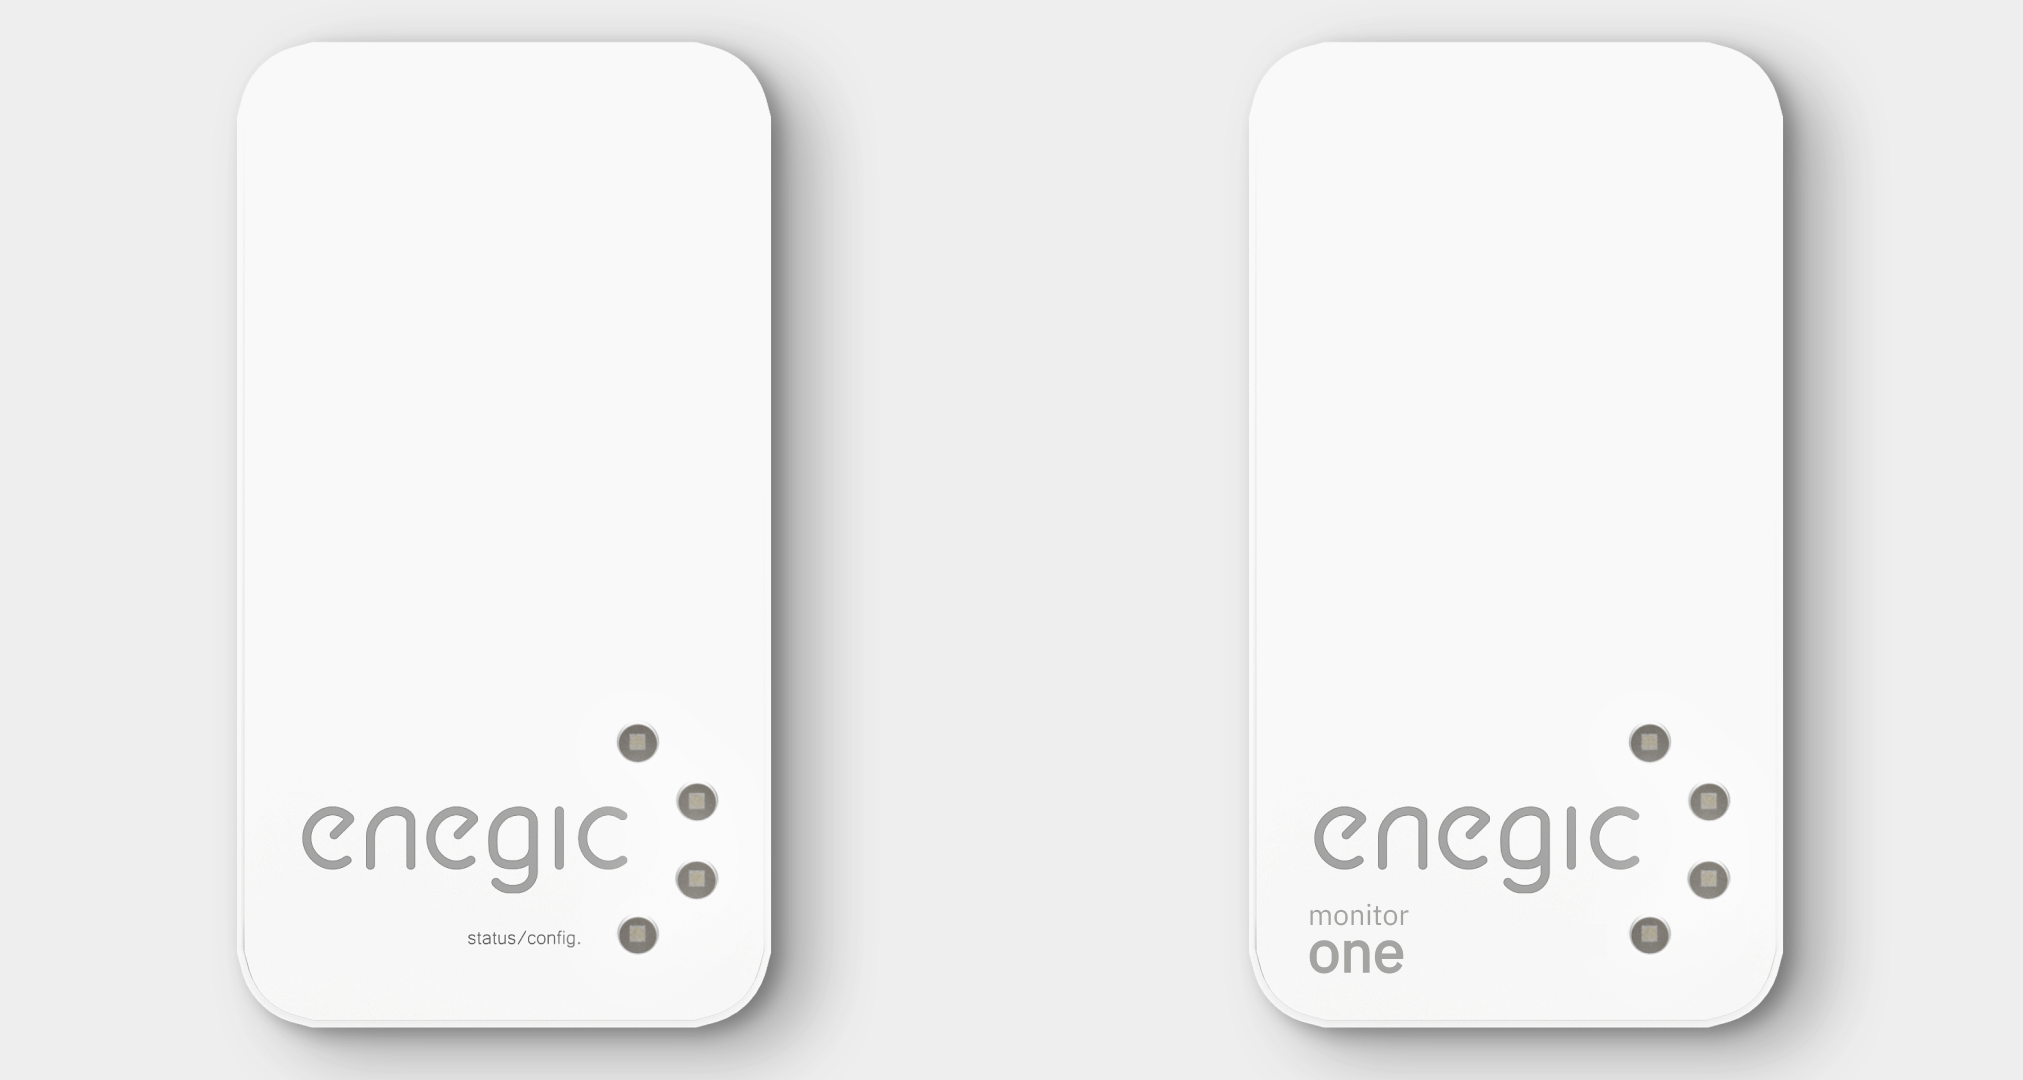 Enegic Monitor and Monitor one status indicators.